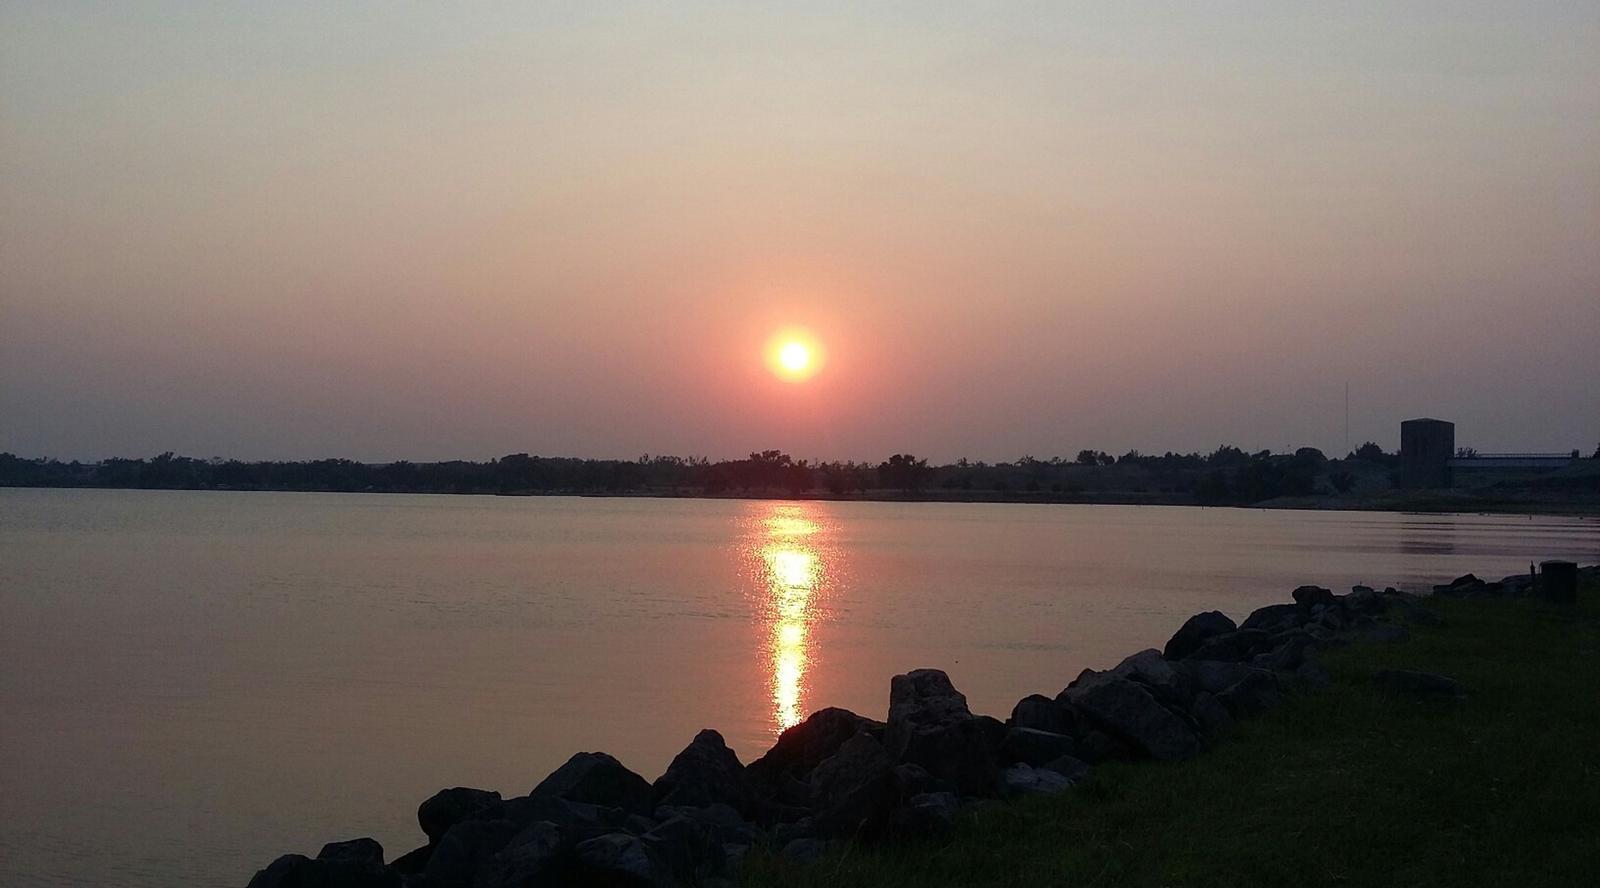 Lakeside Drive at sunsetSunset over Ft. Supply Lake